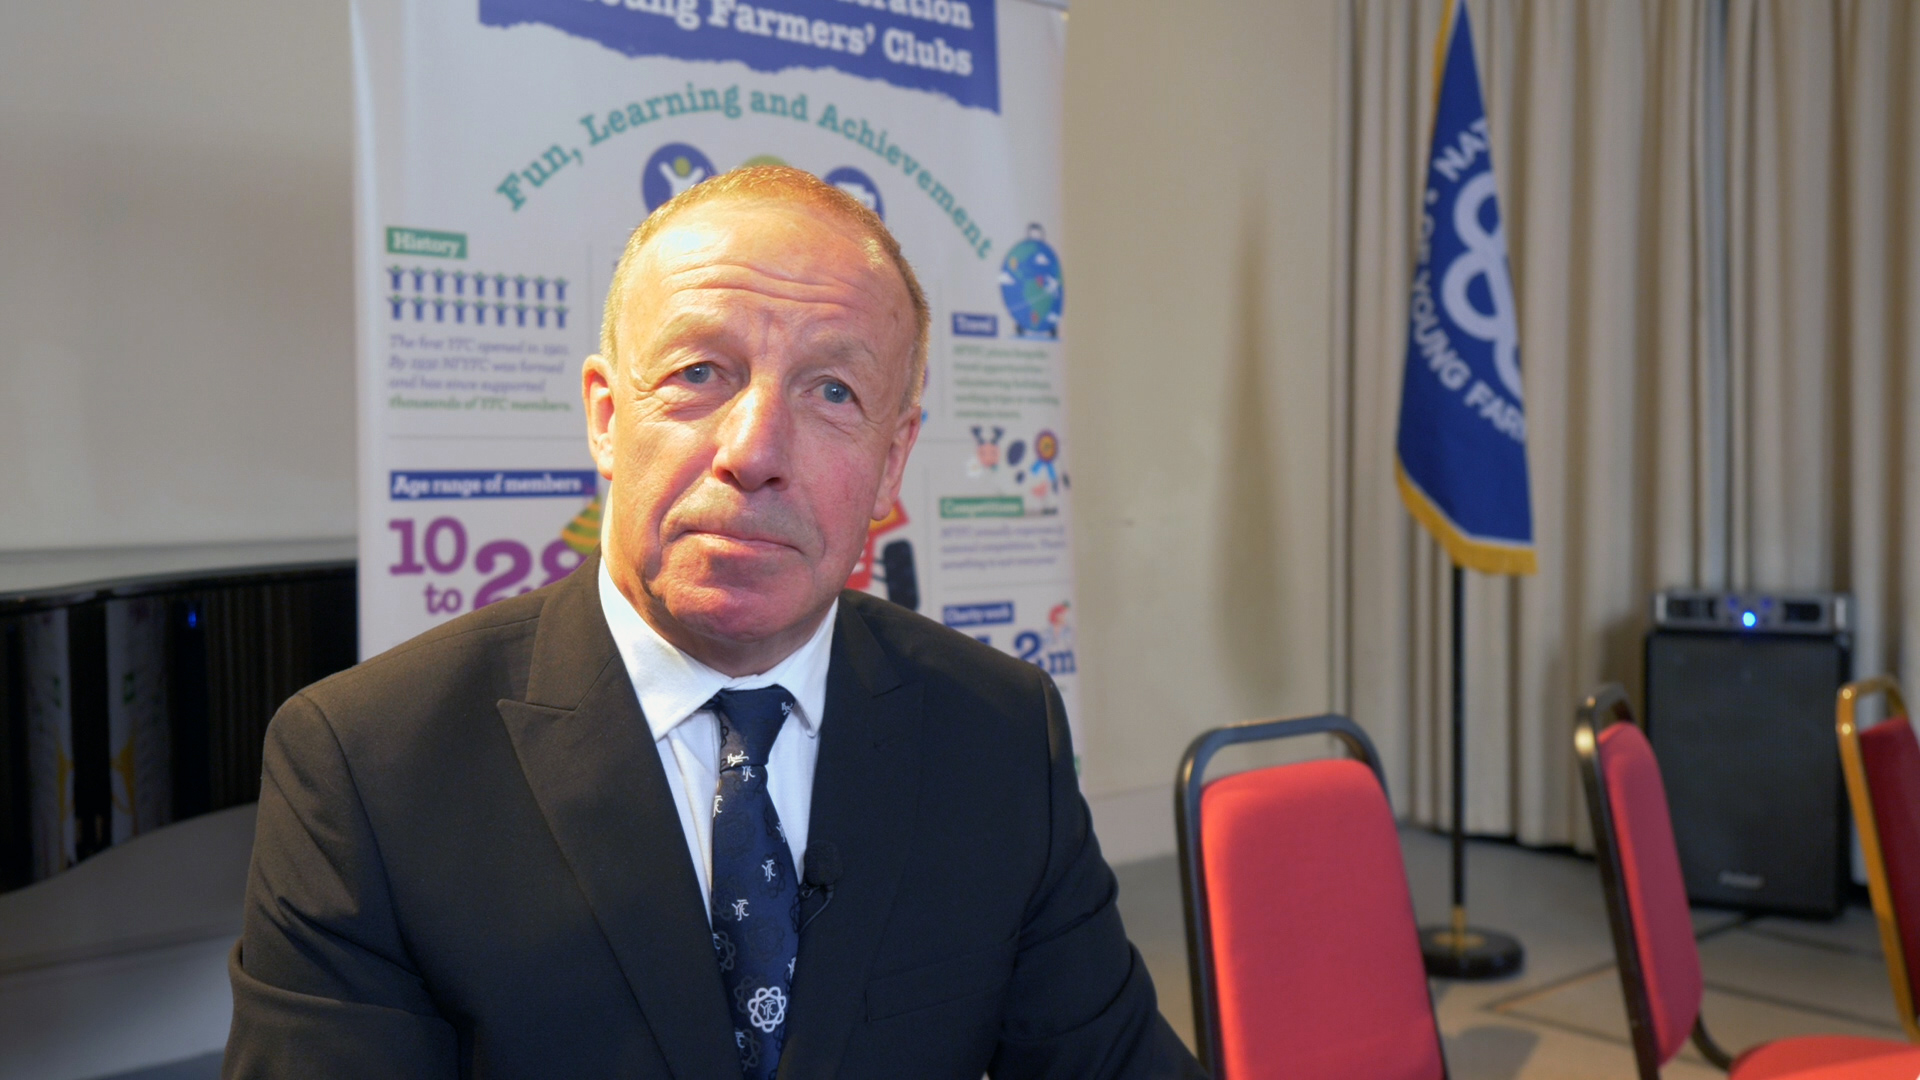 NFYFC announces industry stalwart John Lee OBE DL as President 